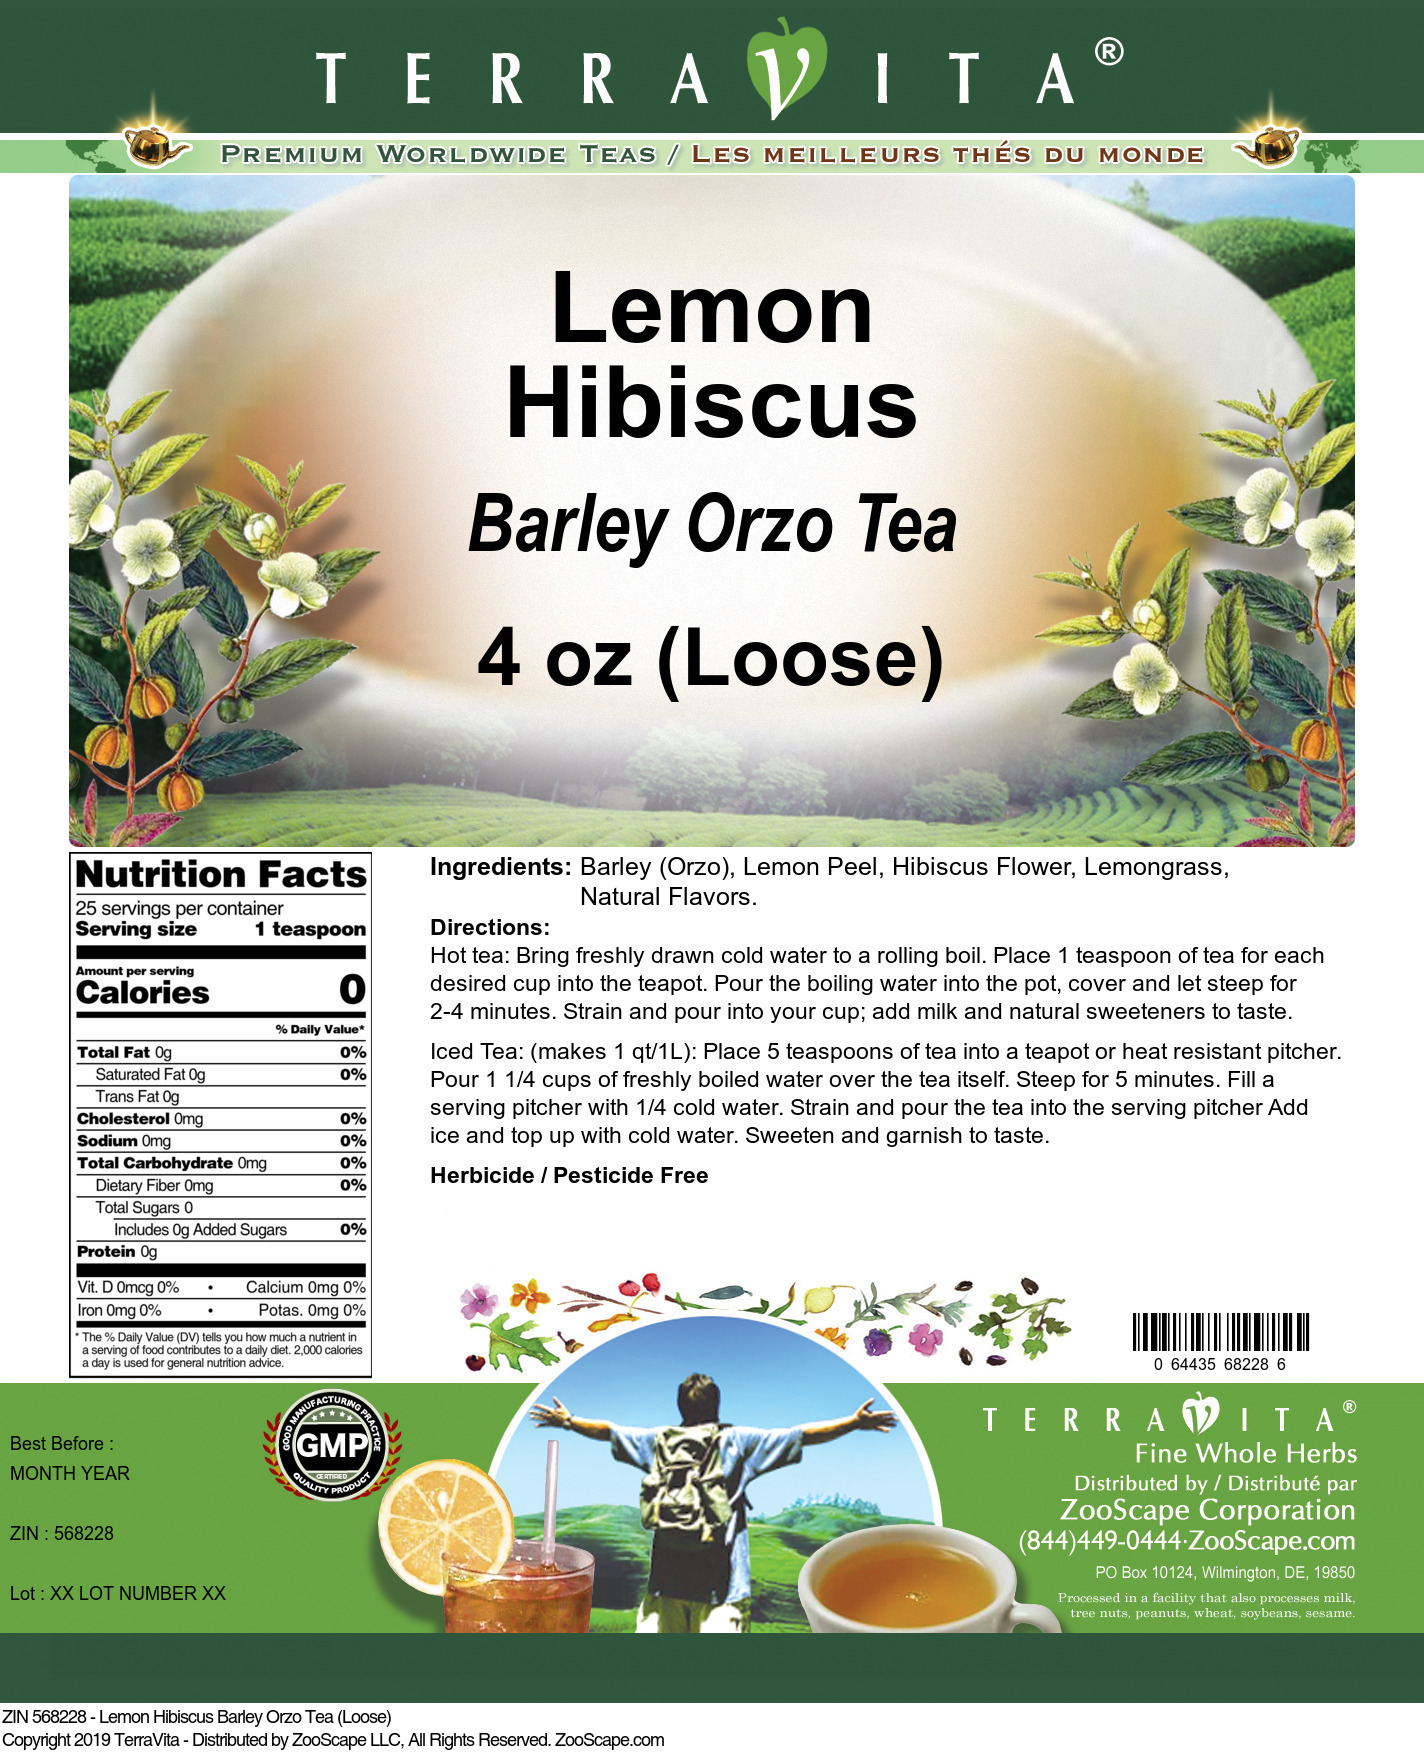 Lemon Hibiscus Barley Orzo Tea (Loose) - Label